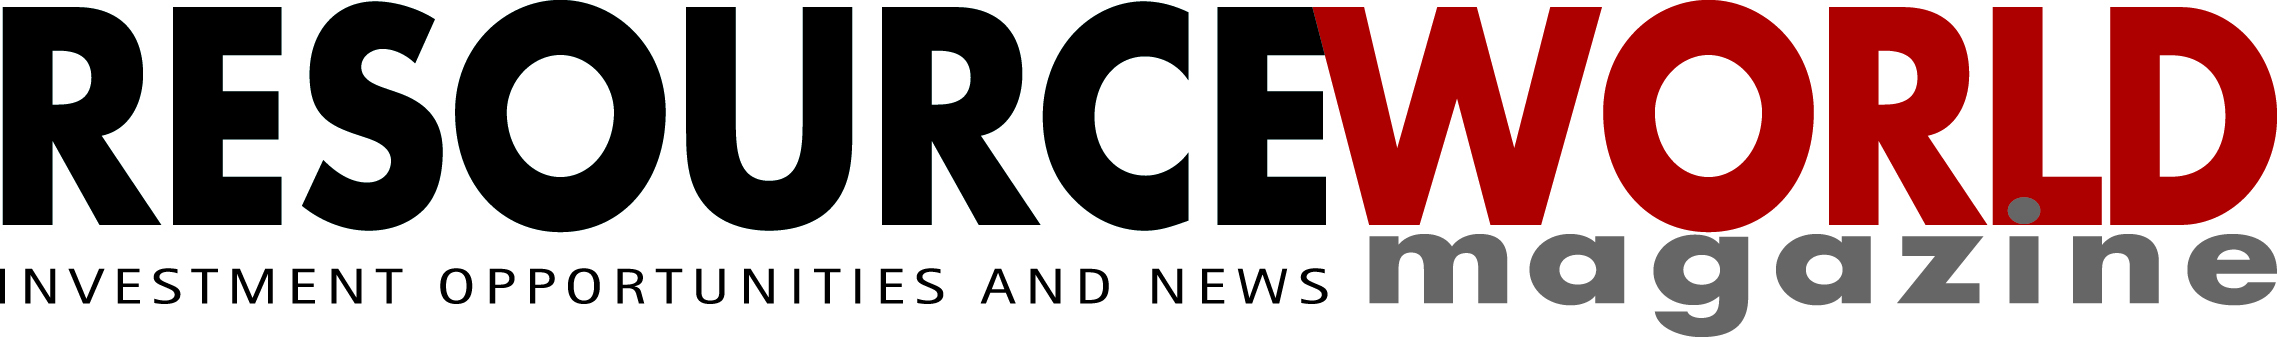 Company logo for Resource World Magazine'